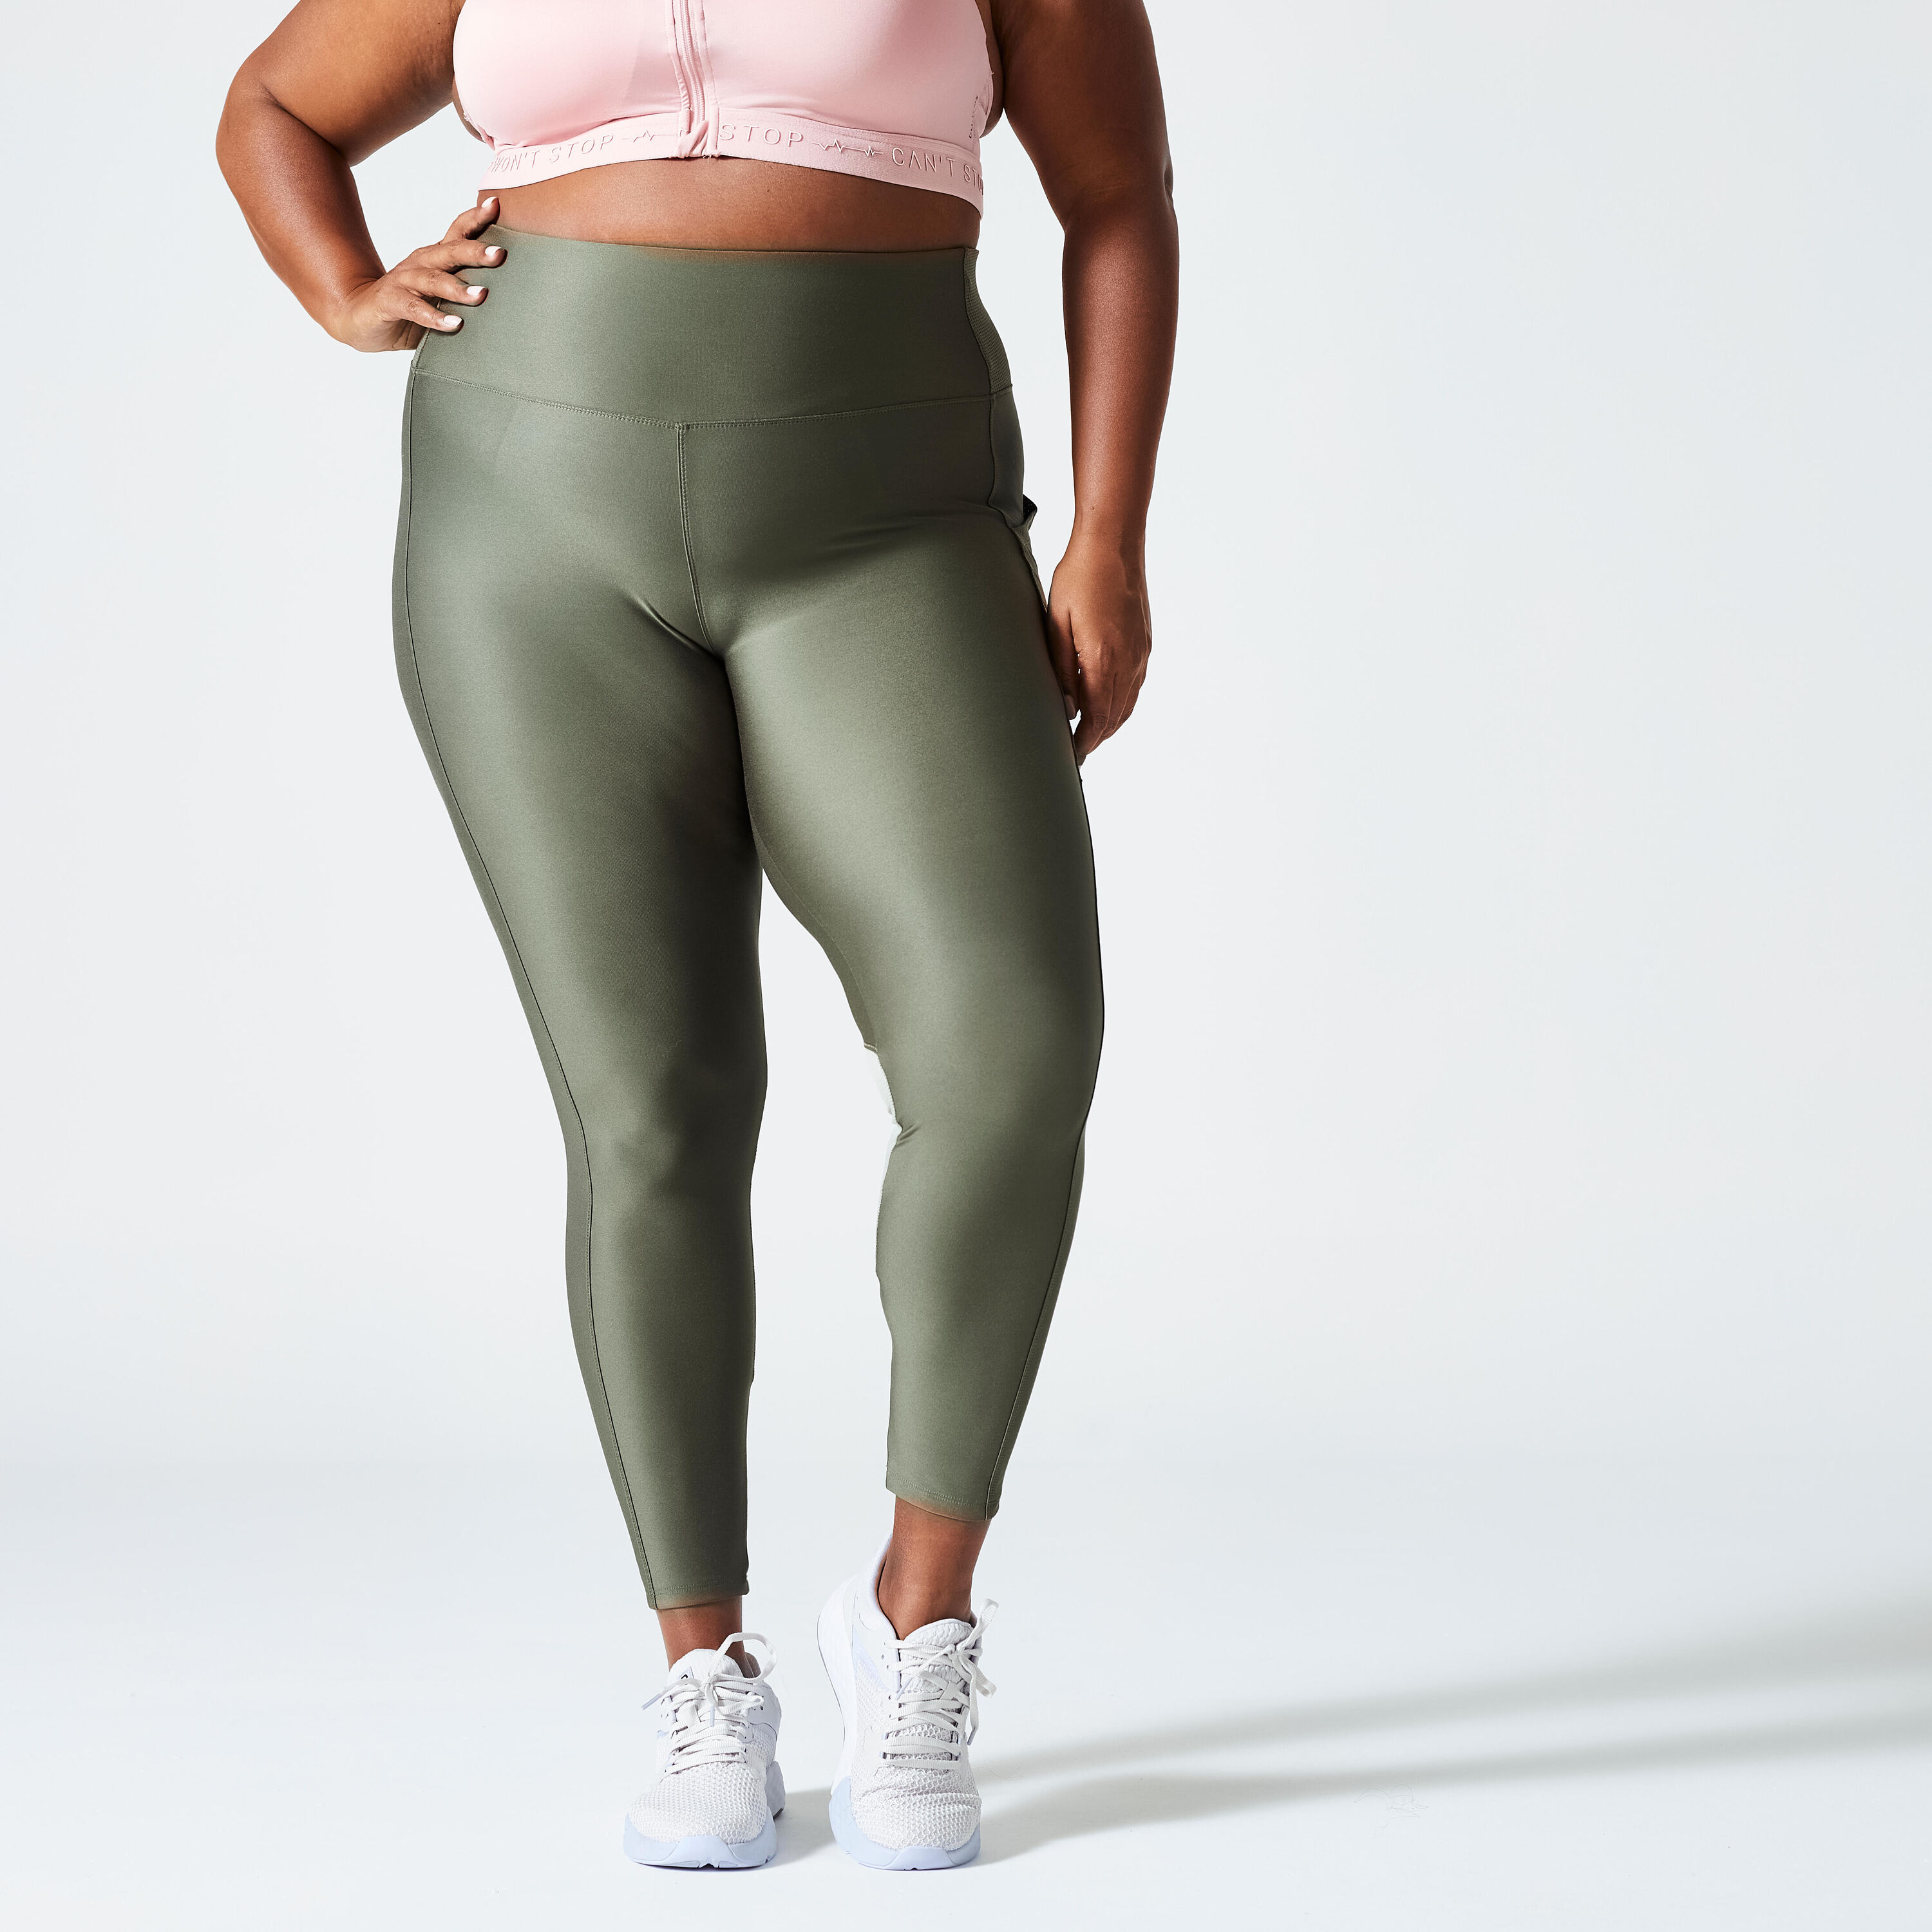 DOMYOS Women's Cardio Fitness Plus Size Leggings with Pocket - Green